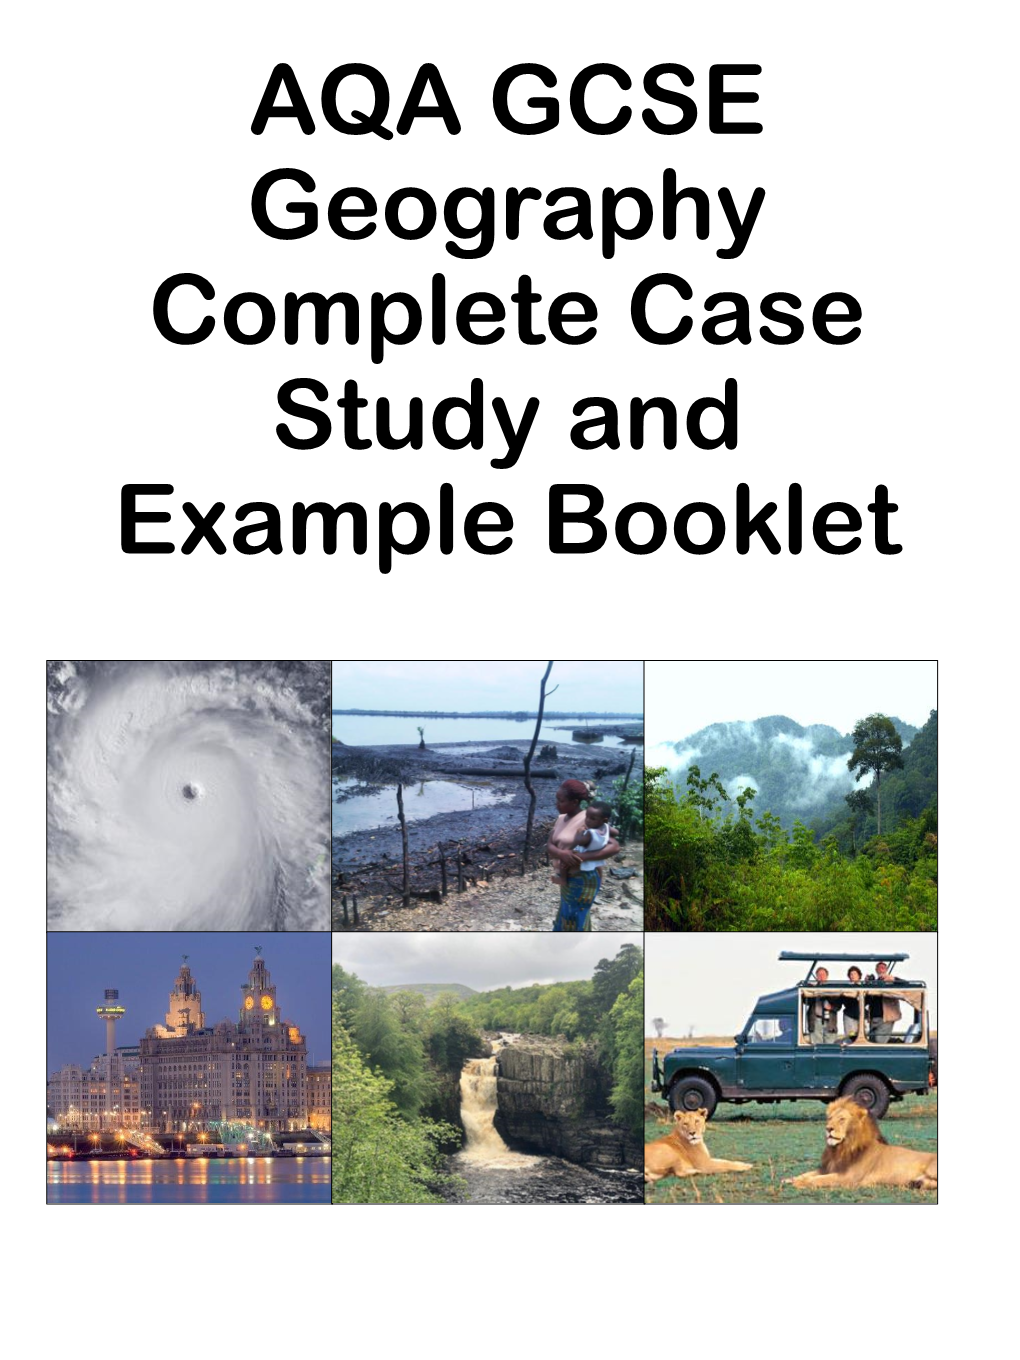 aqa gcse geography manchester case study